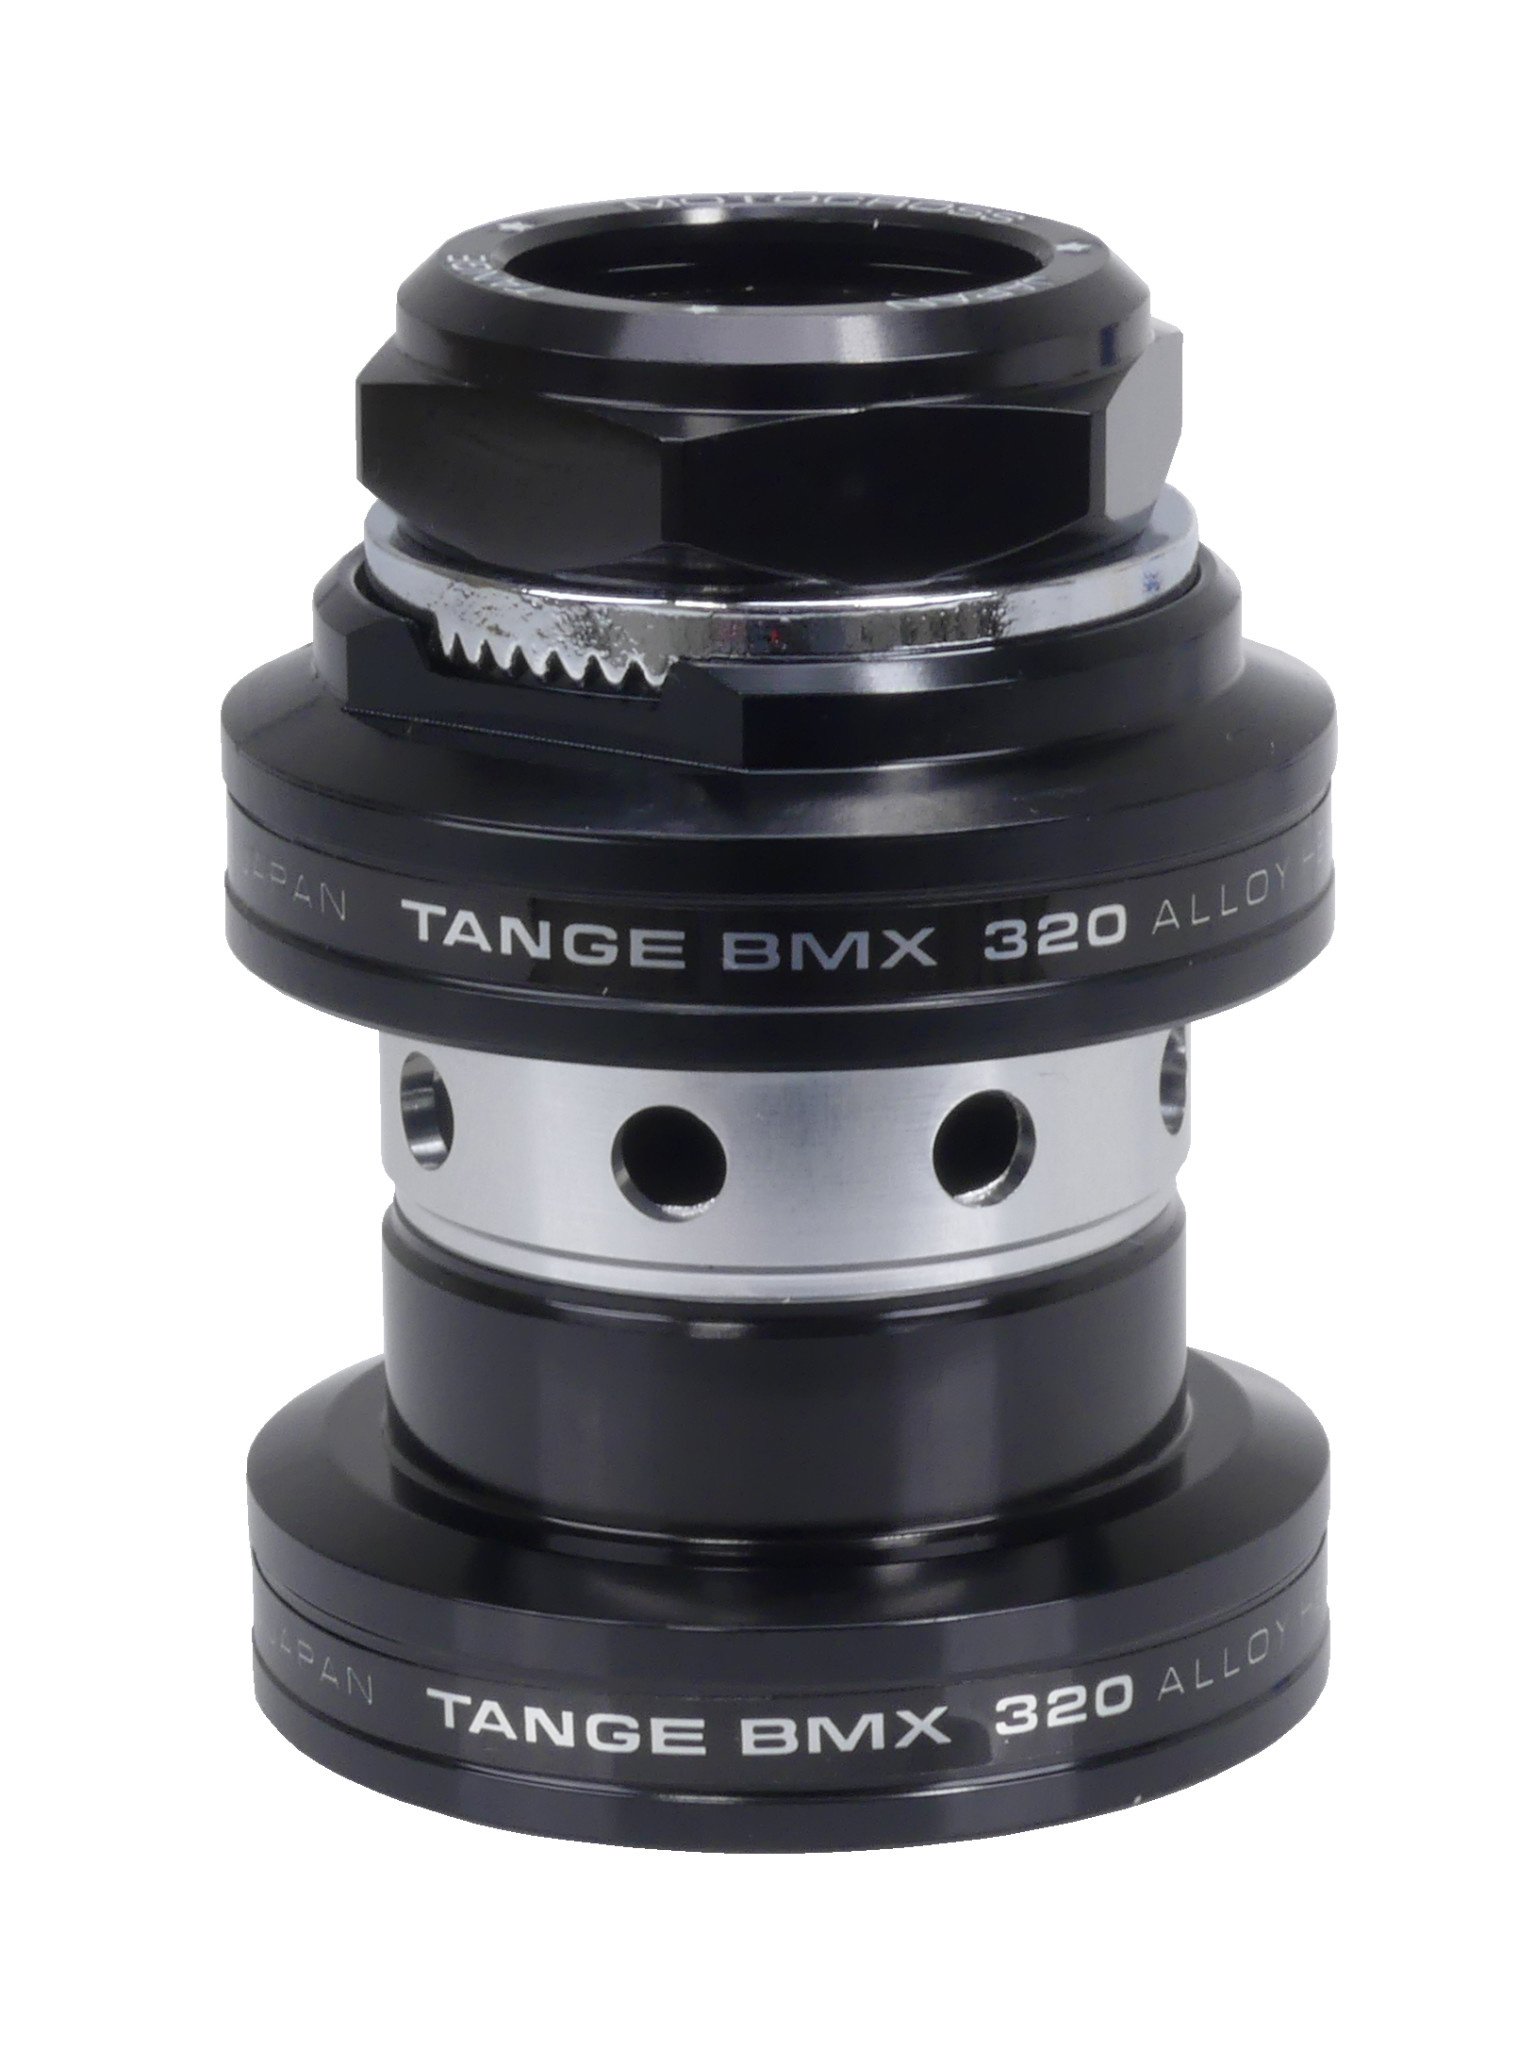 Tange MX320 sealed bearing aluminum alloy old school BMX bicycle headset -  1 threaded w/ 32.7mm cups - BLACK - Porkchop BMX